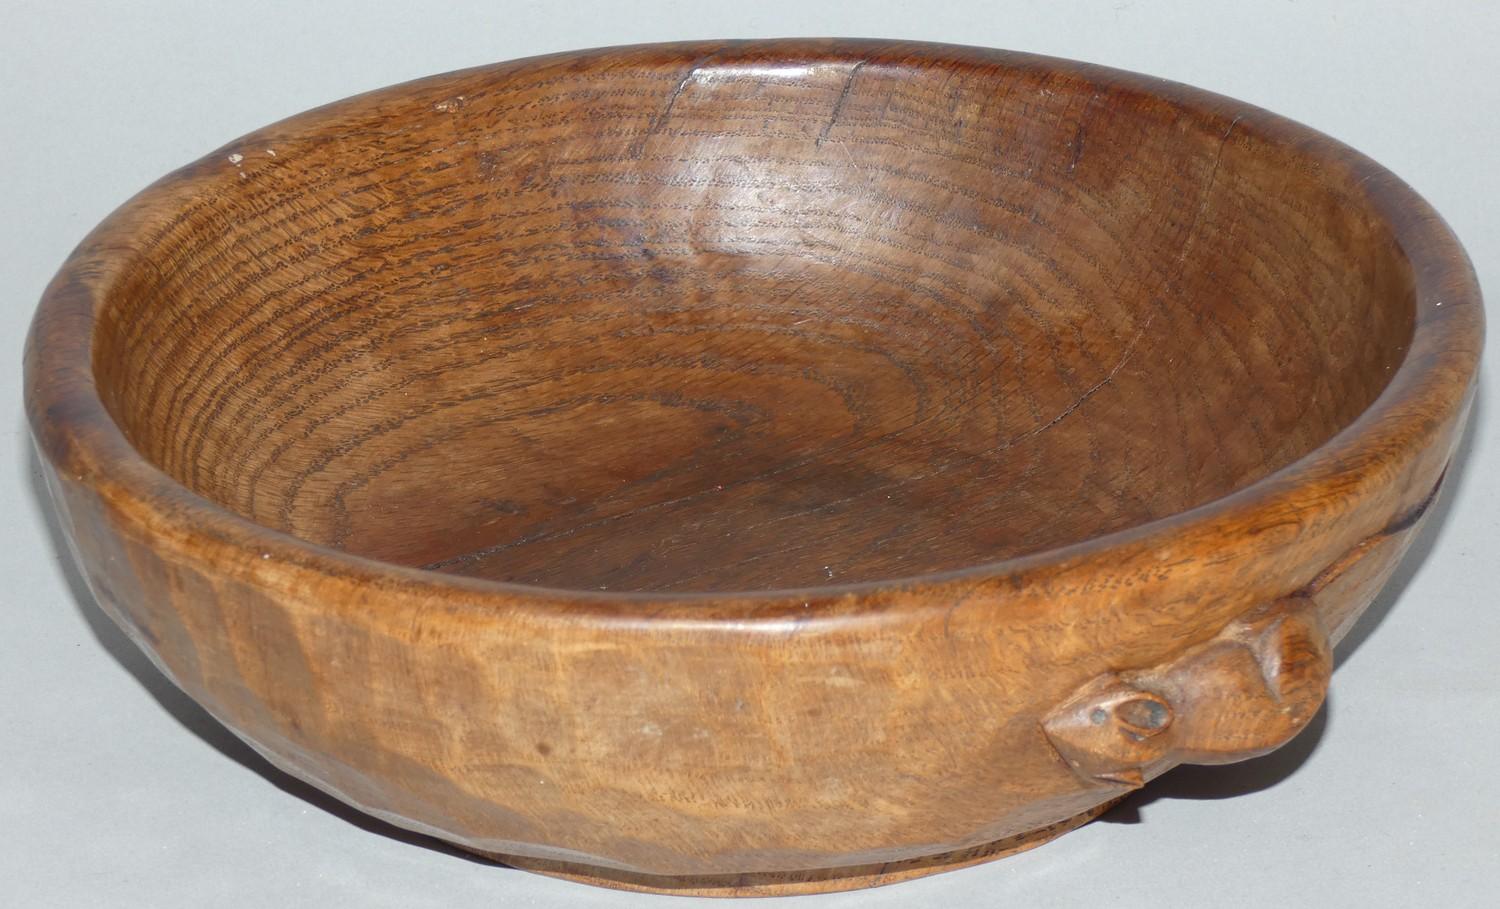 Robert Mouseman Thompson (1876-1955), an oak circular fruit bowl, probably pre war, adzed exterior